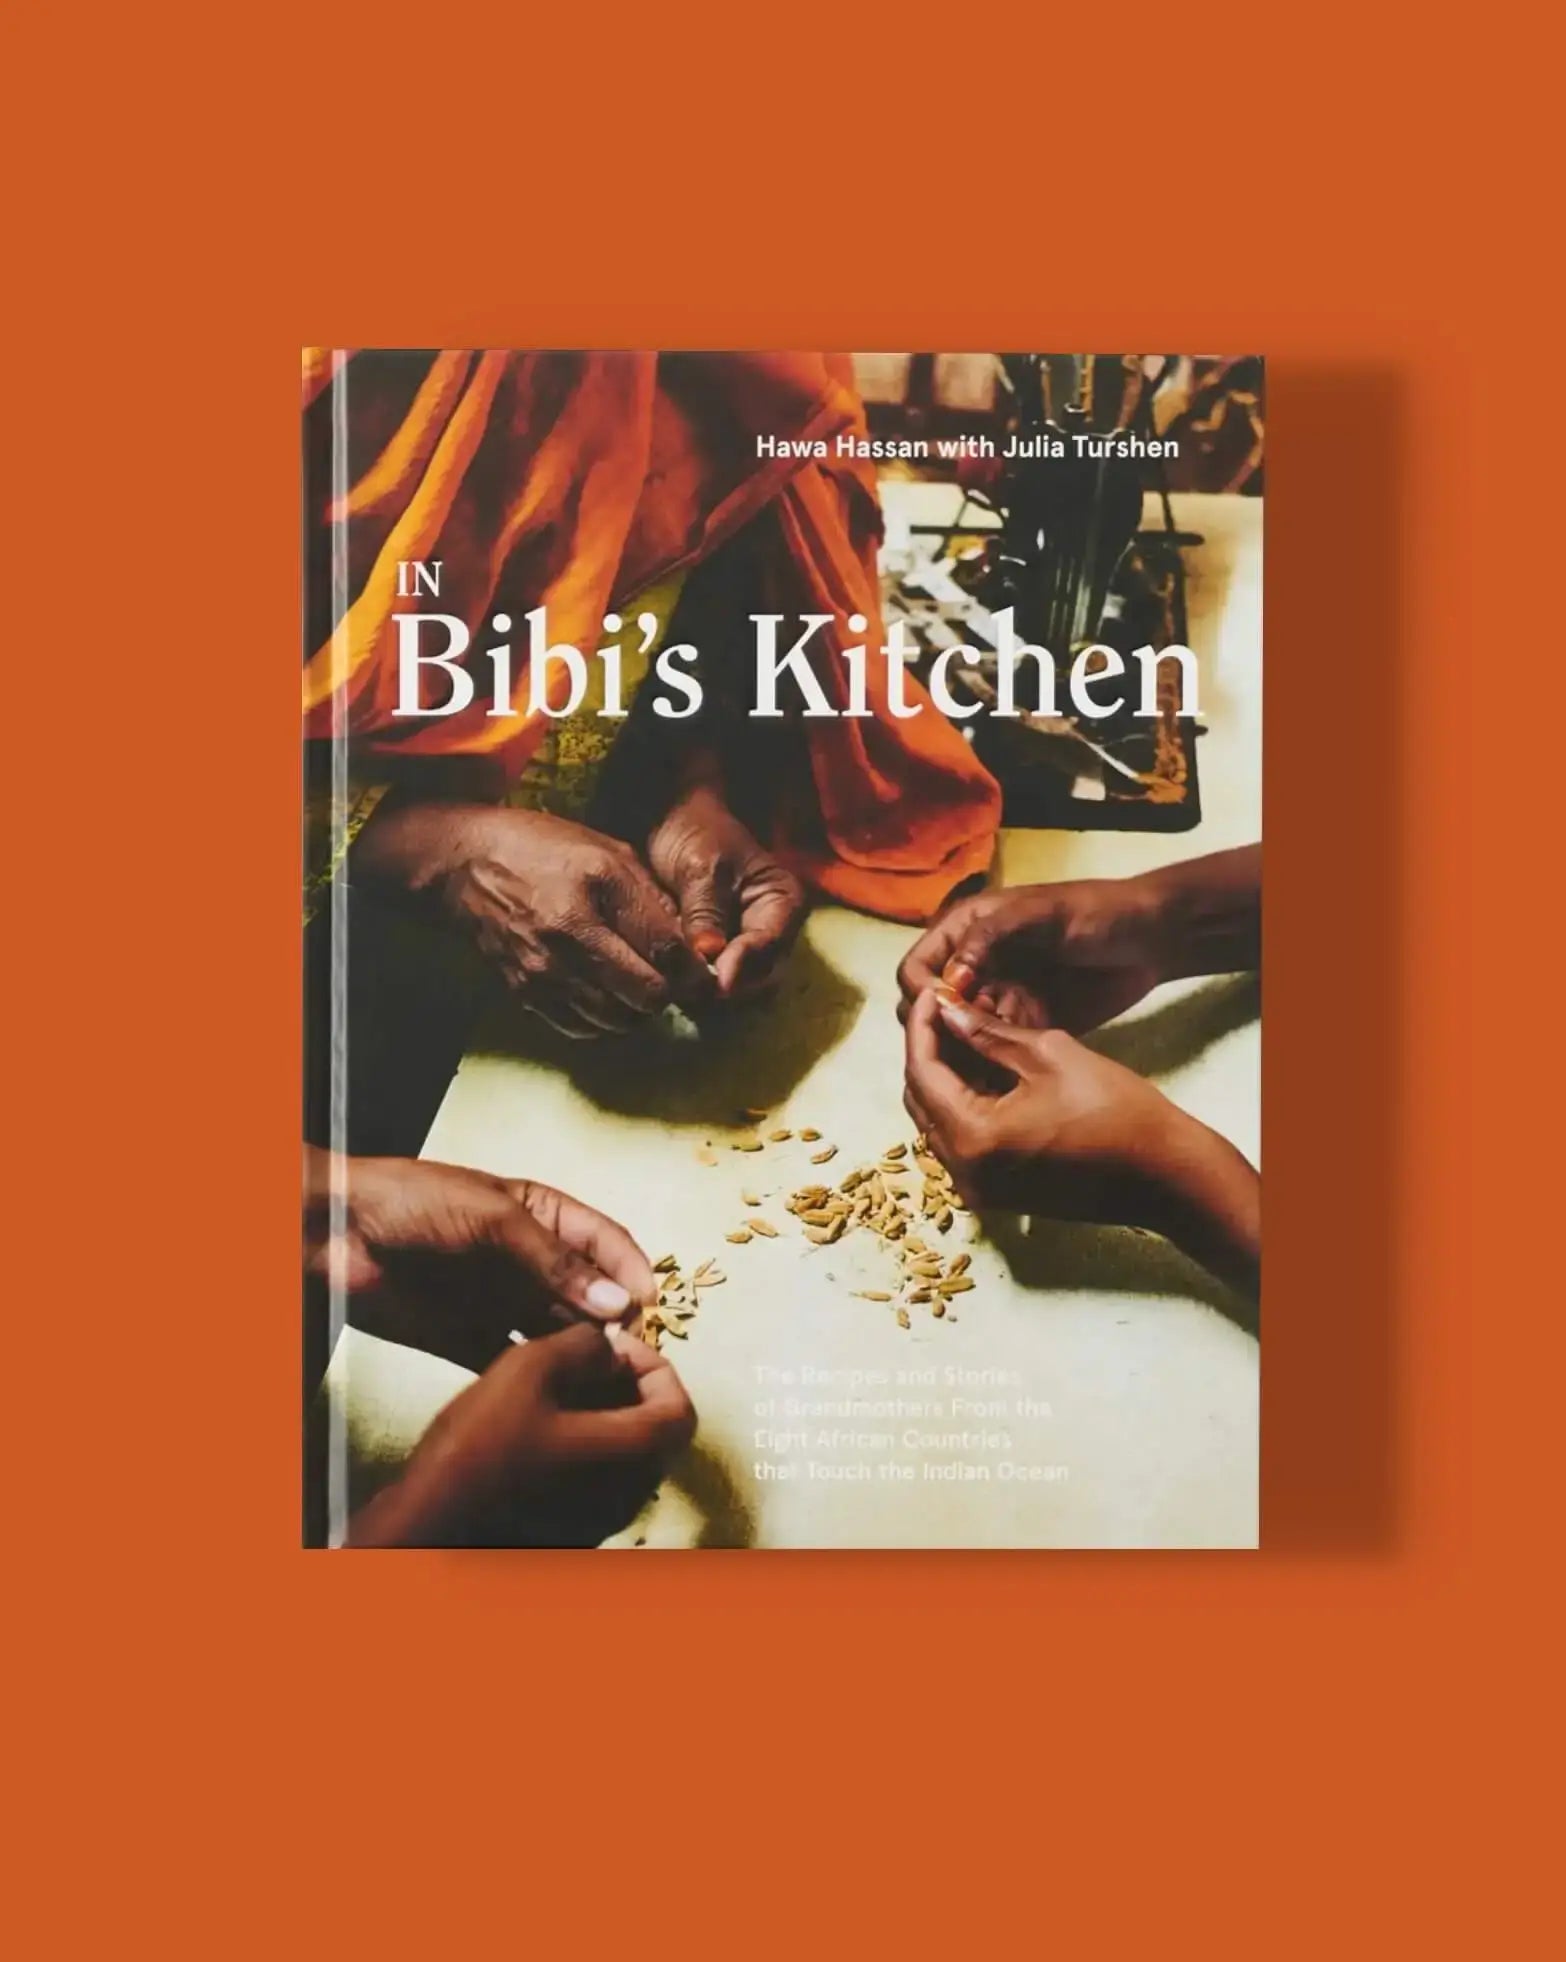 Buy on Amazon: Hawa Hassan's Cookbook "In Bibi's Kitchen"